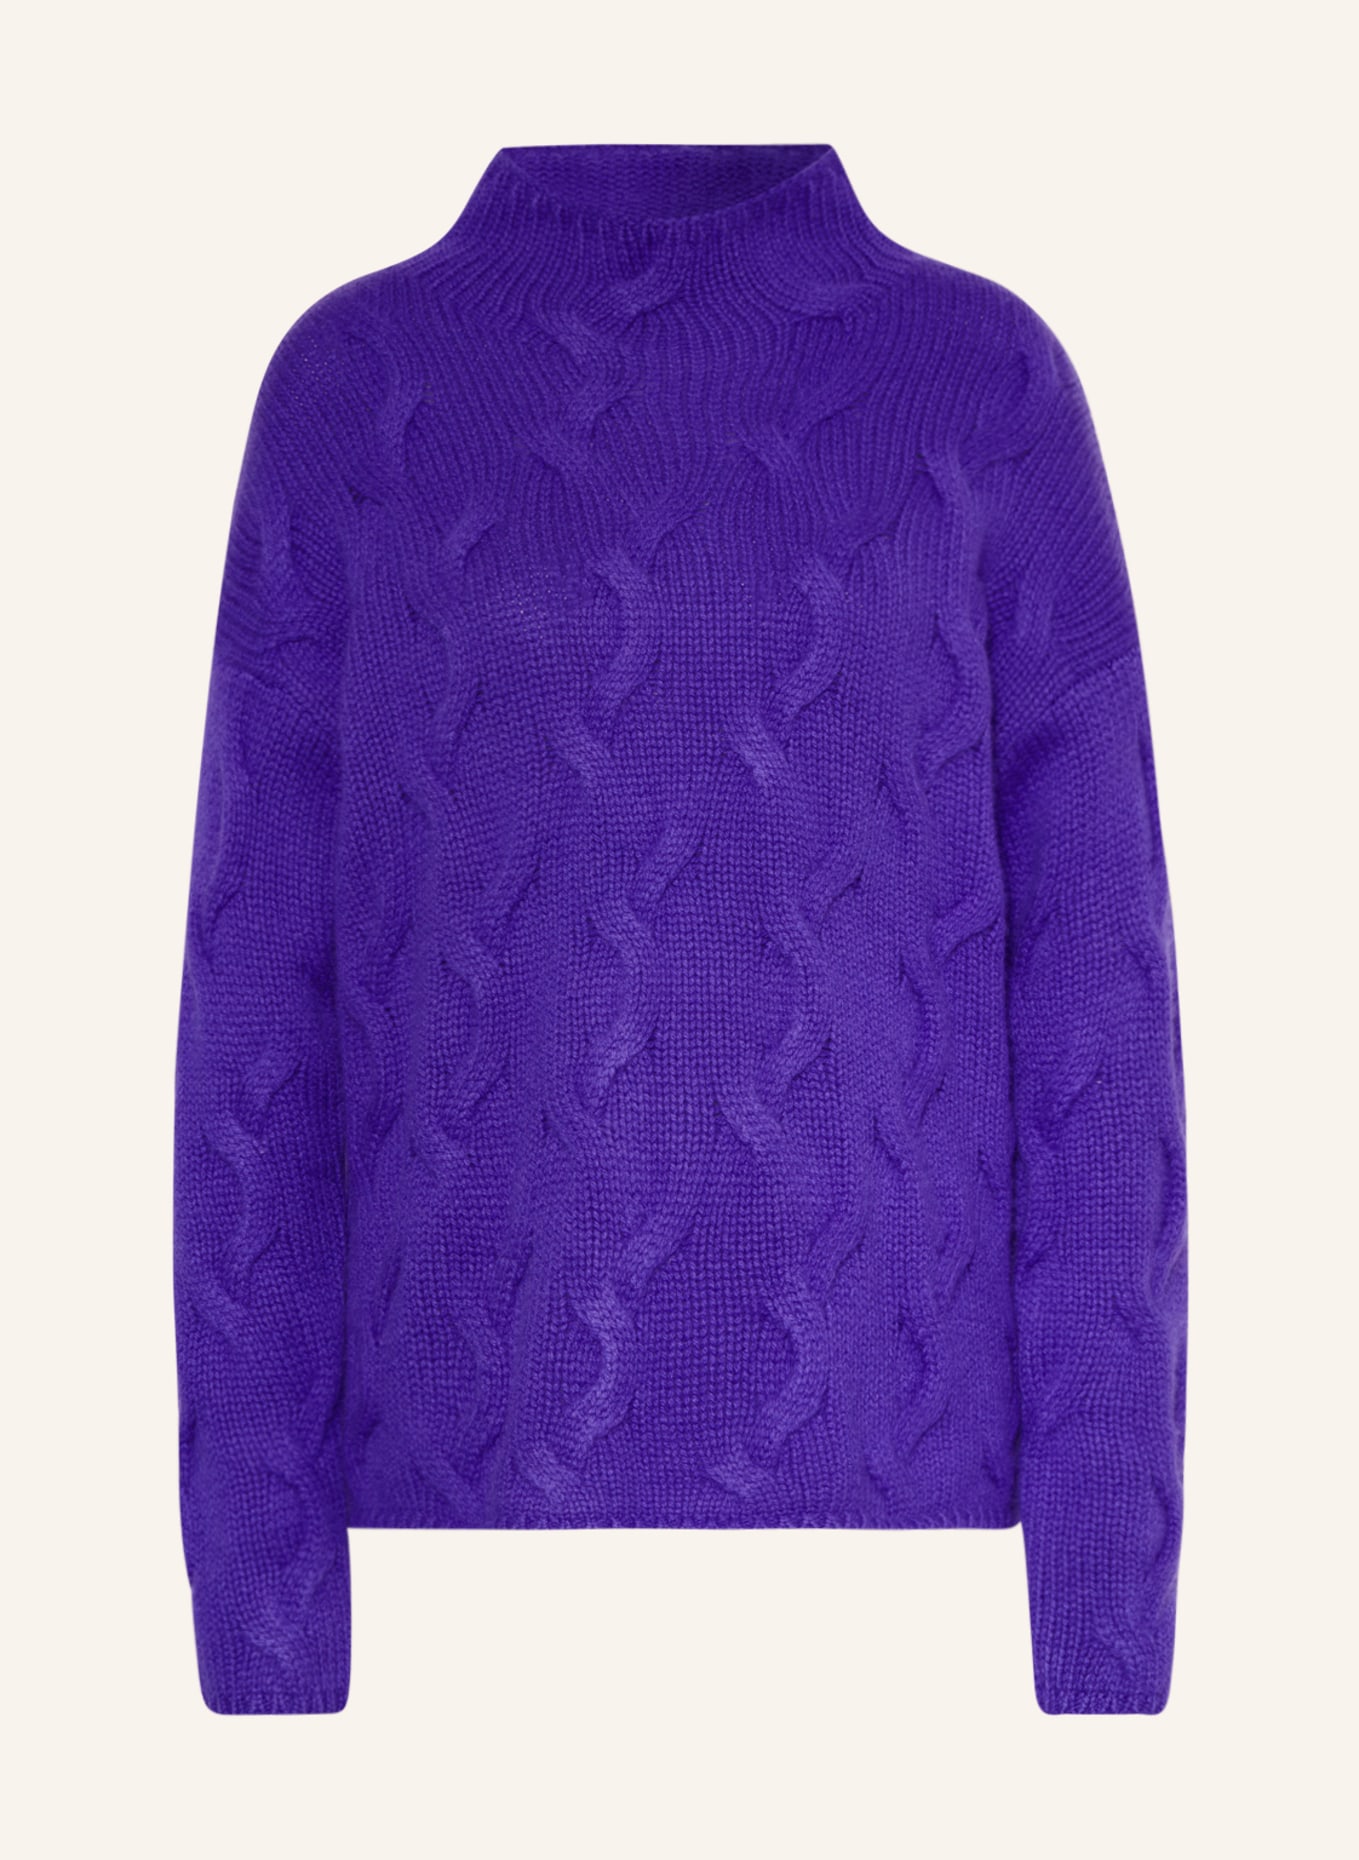 lilienfels Pullover mit Cashmere, Farbe: WLC-470650S lila (Bild 1)